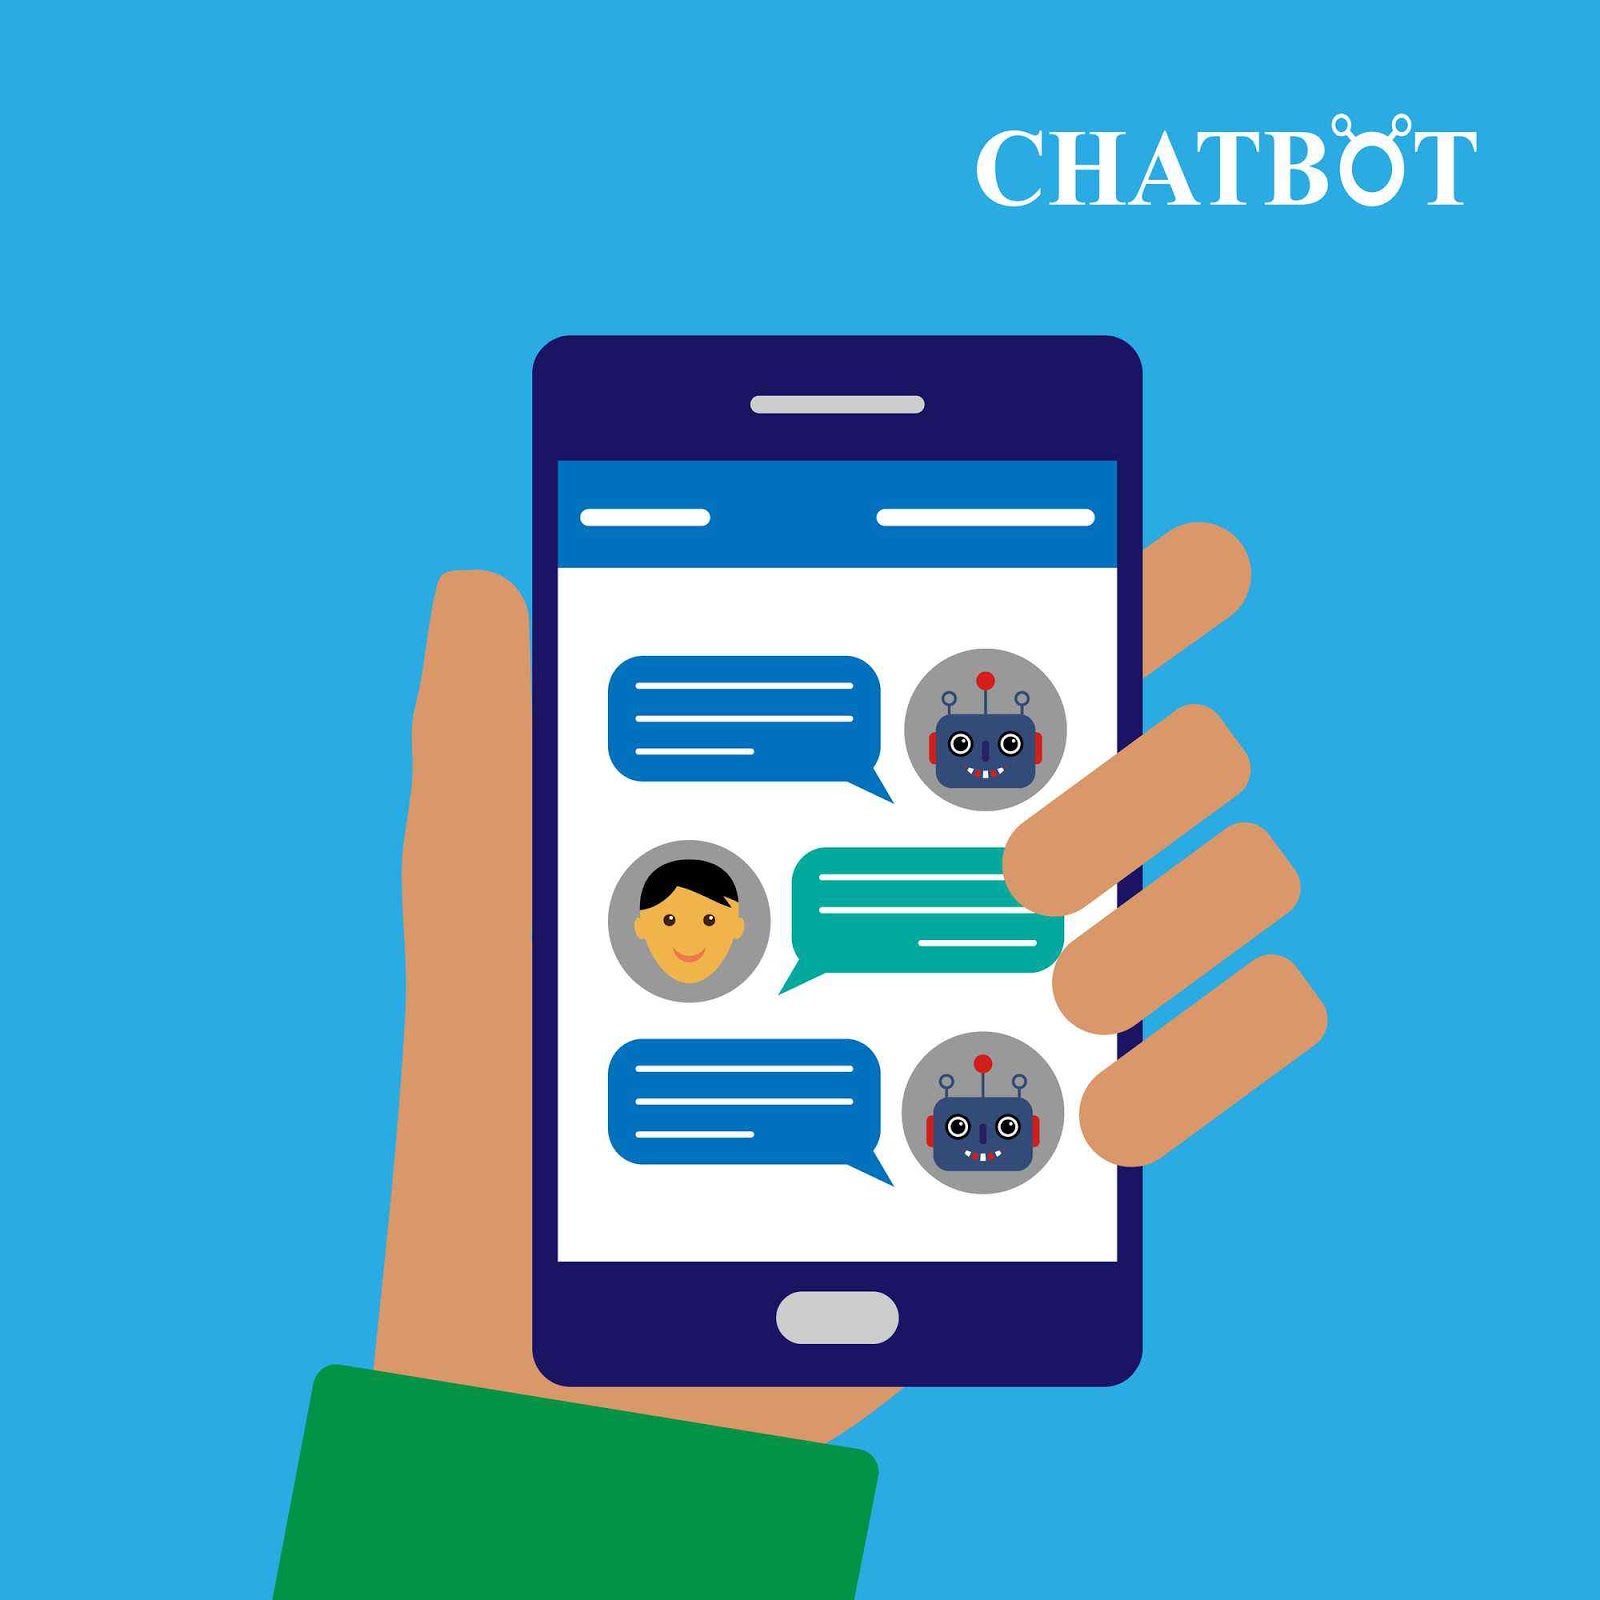 Chatbot app Victoria- London- England